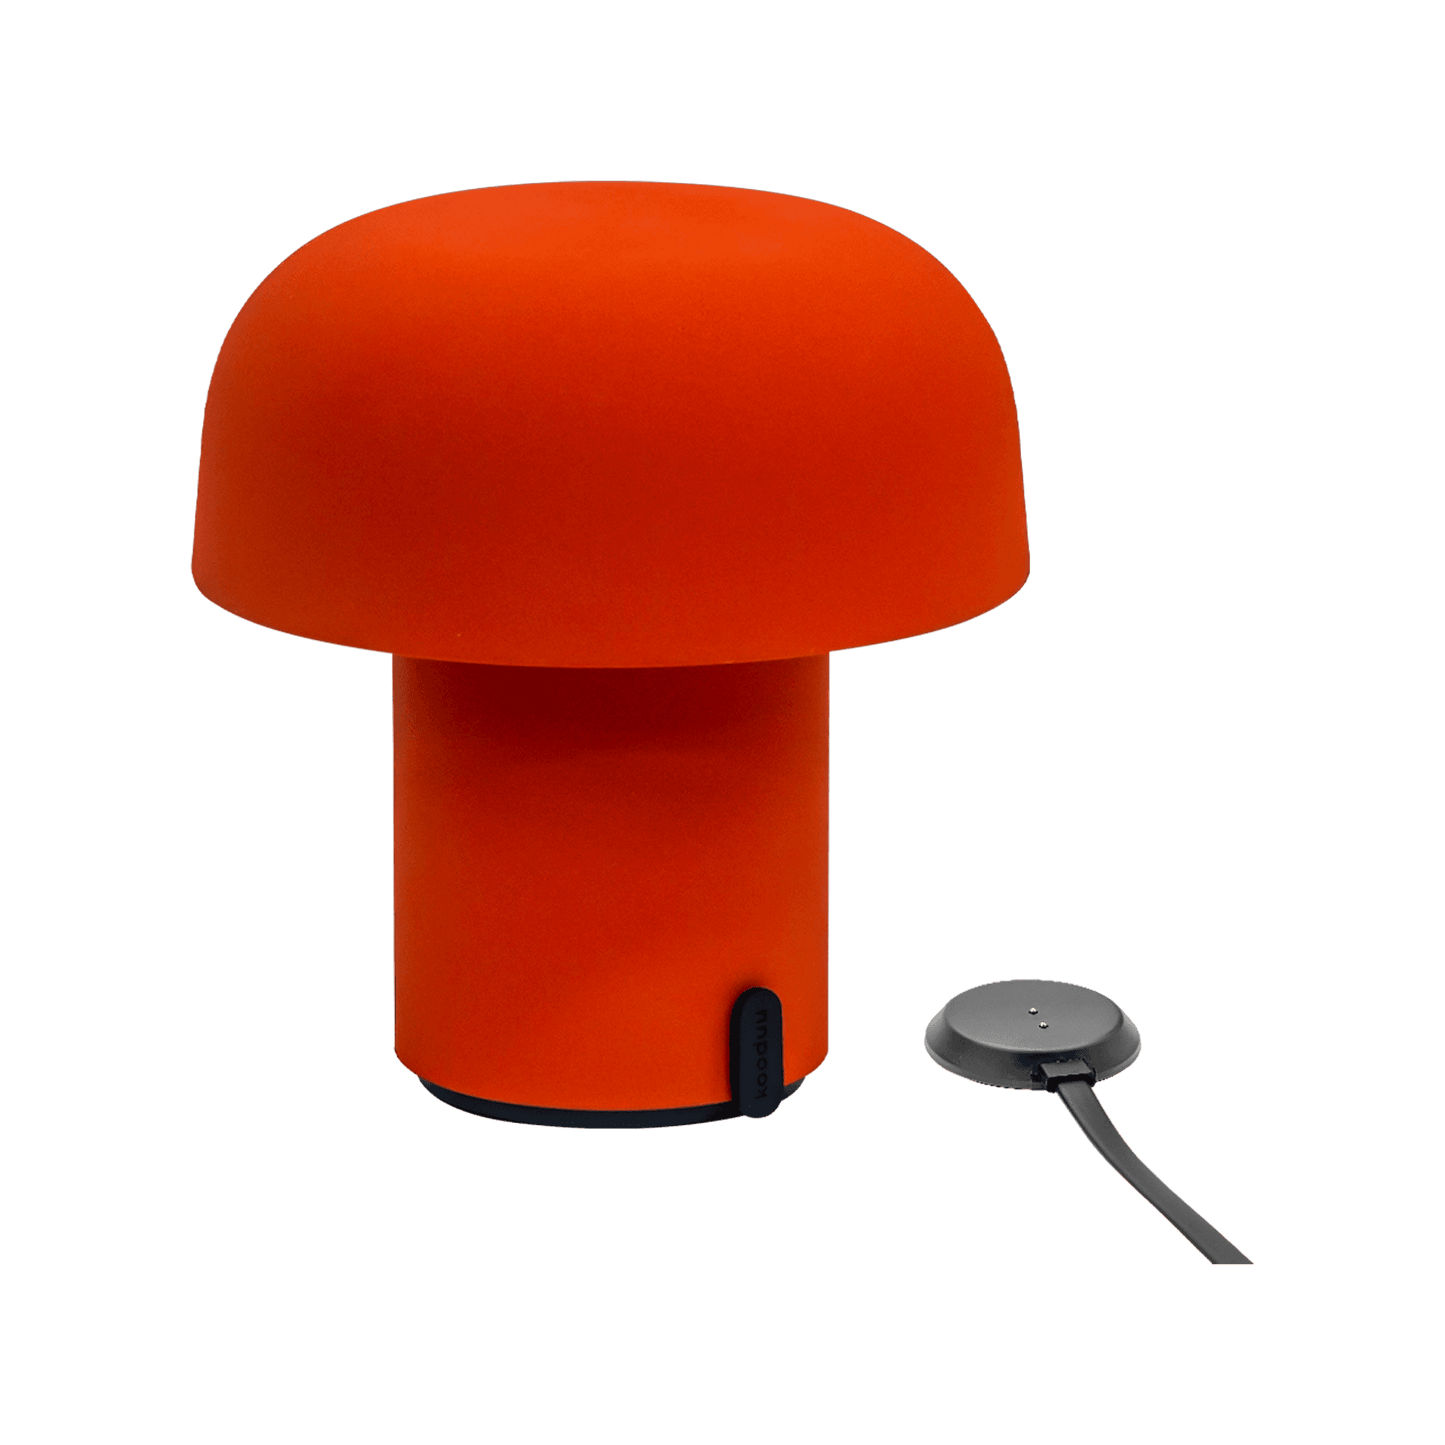 Kooduu Sensa Portable LED Lamp in Orange